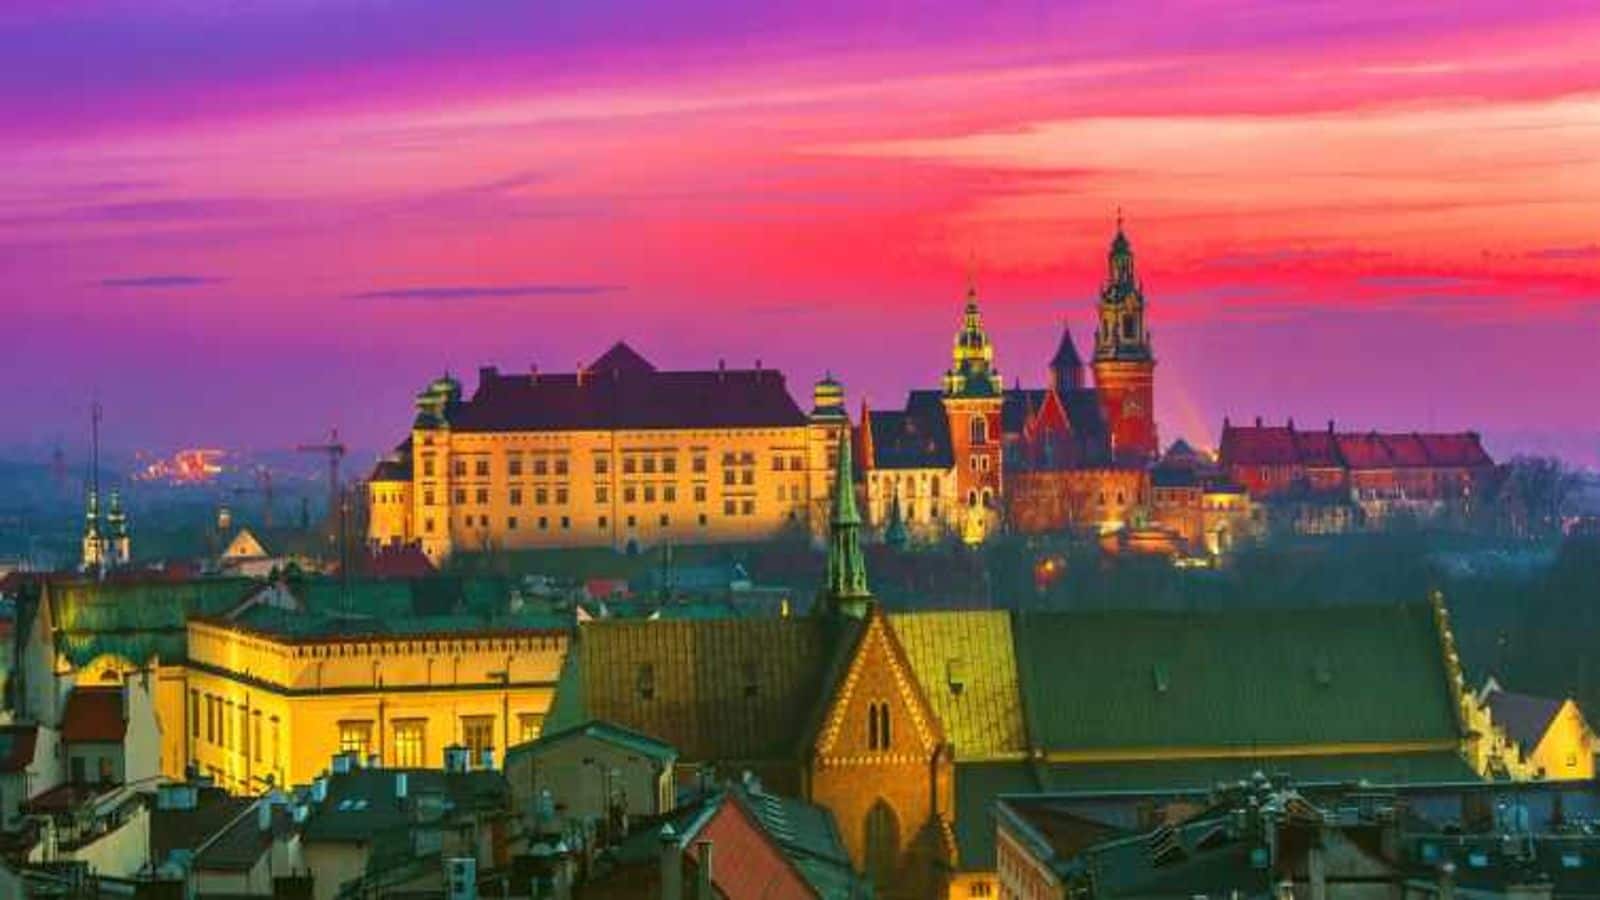 Step back in time: Explore Krakow's historic heart